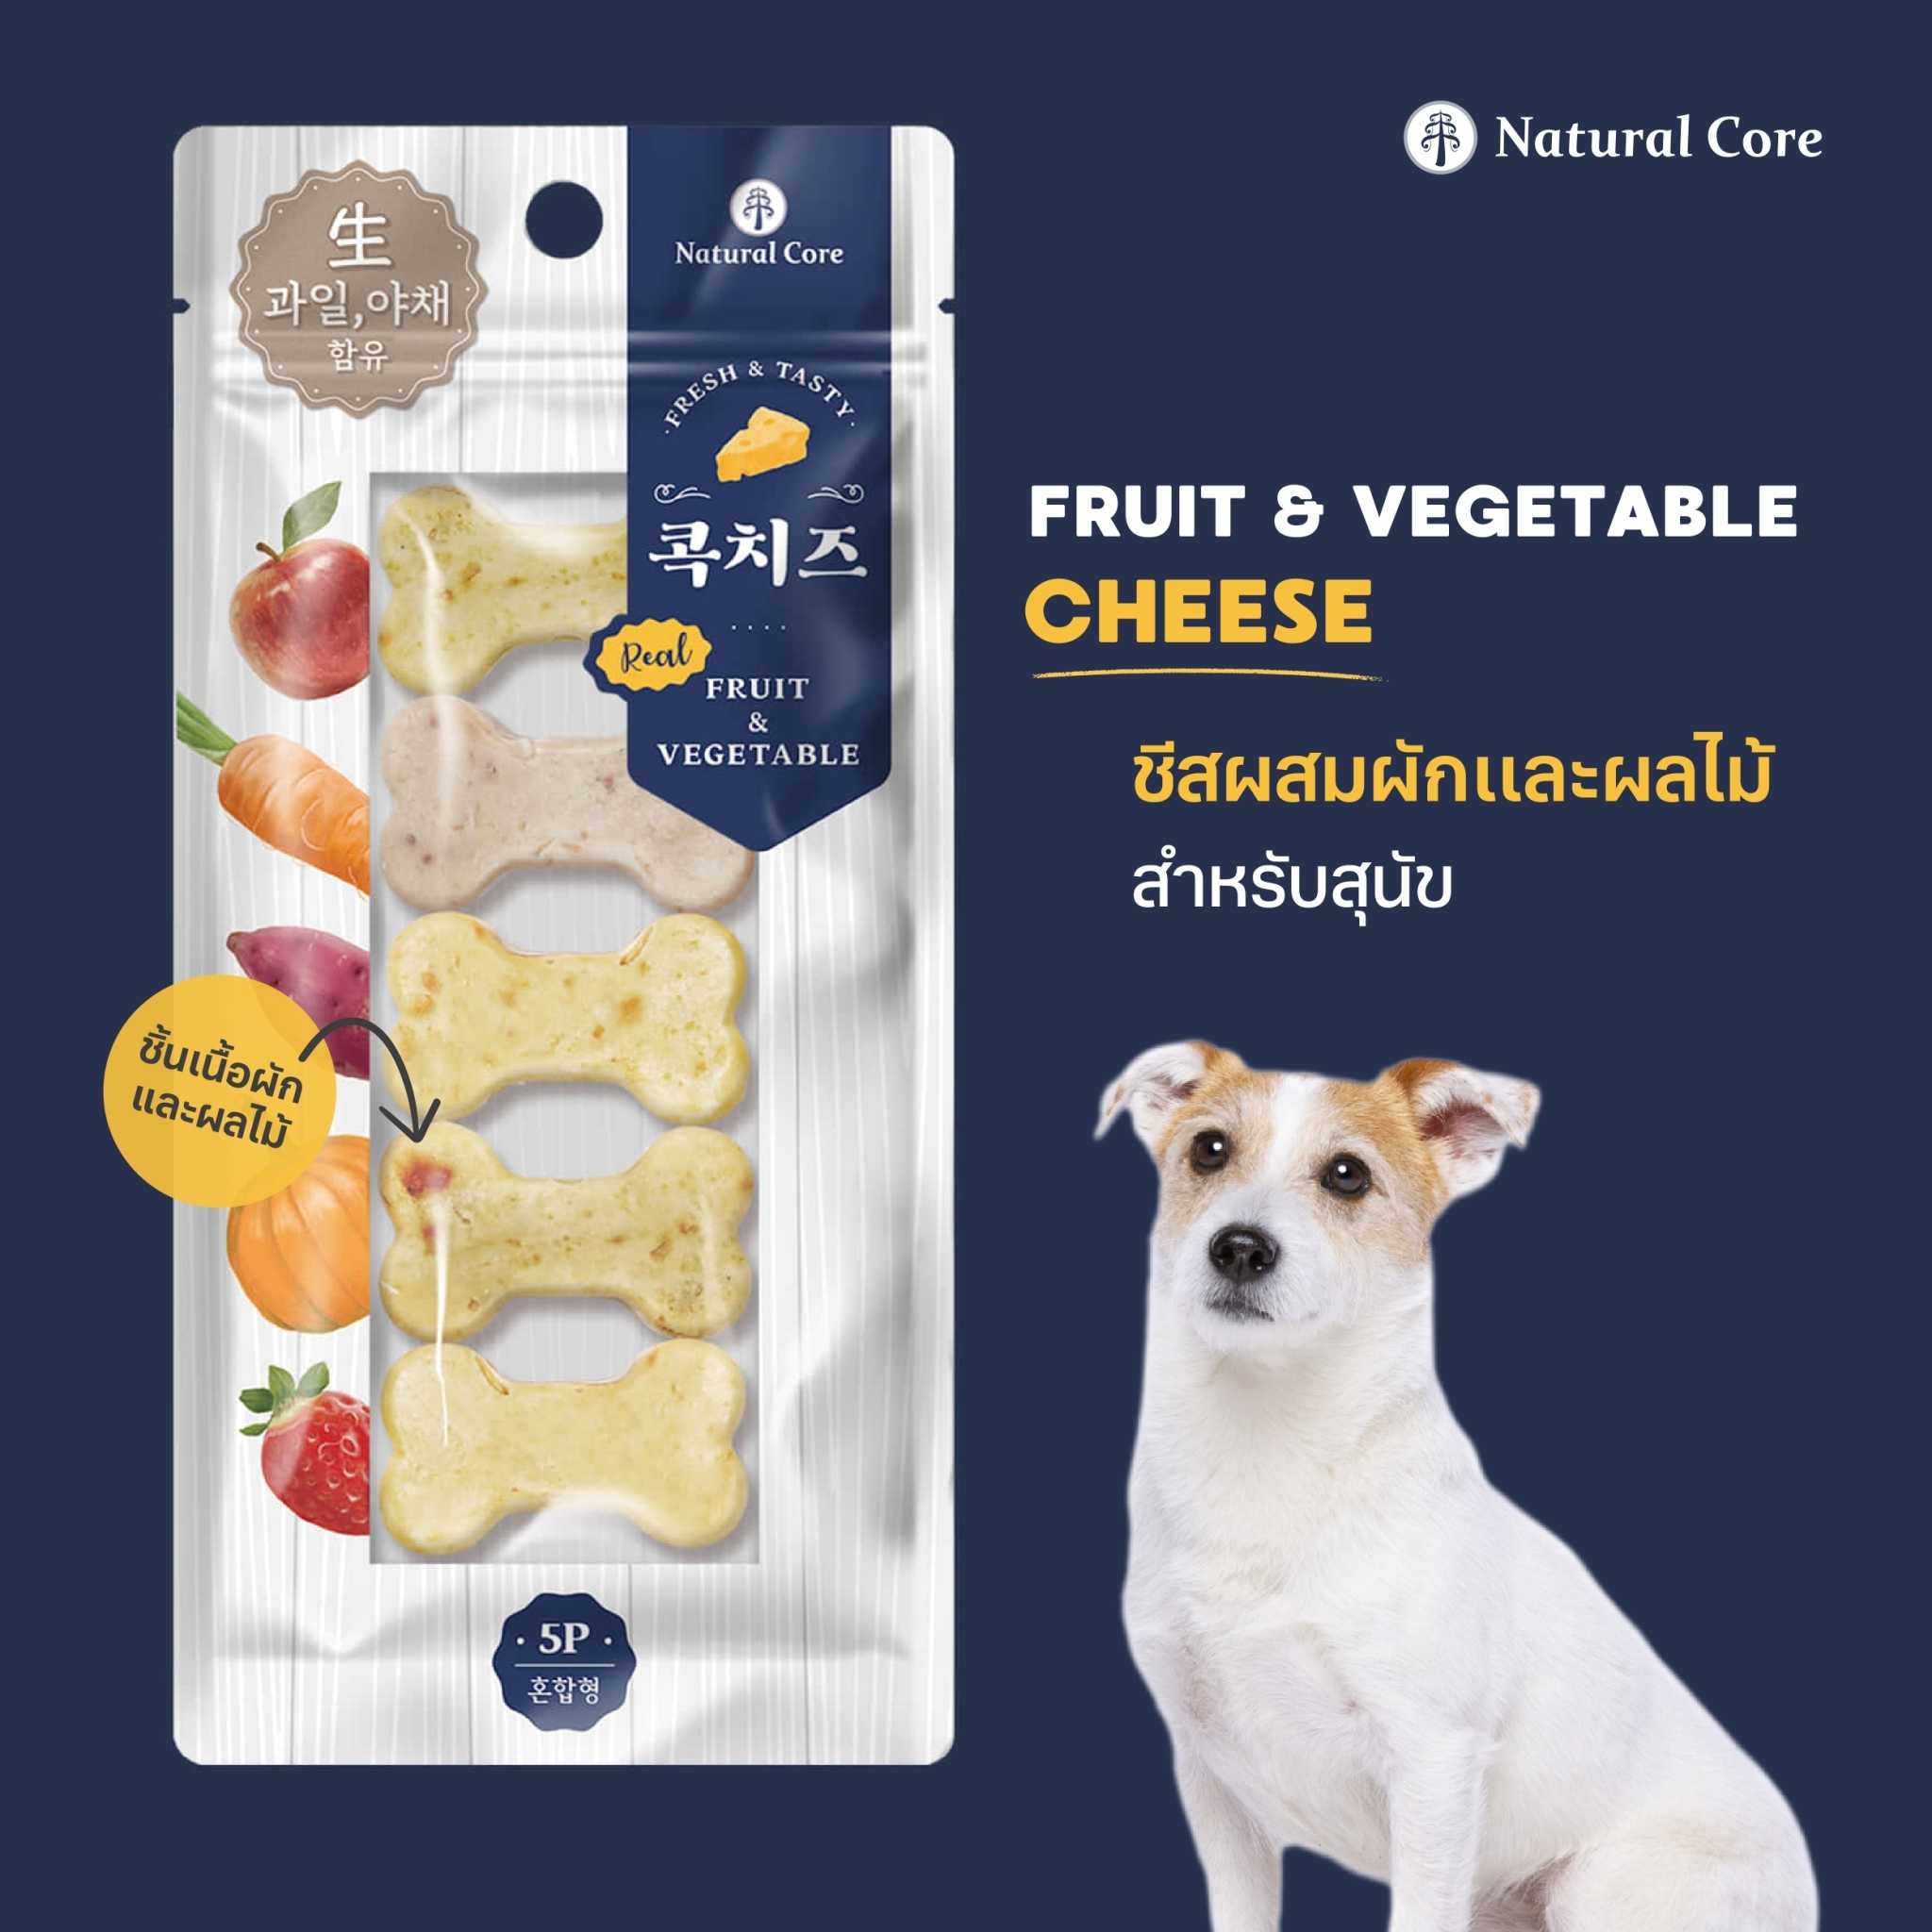 Natural Core Fruit and Vegetable Cheese ชีสผสมผักเเละผลไม้ ขนมสุนัข นำเข้าจากเกาหลี 🇰🇷